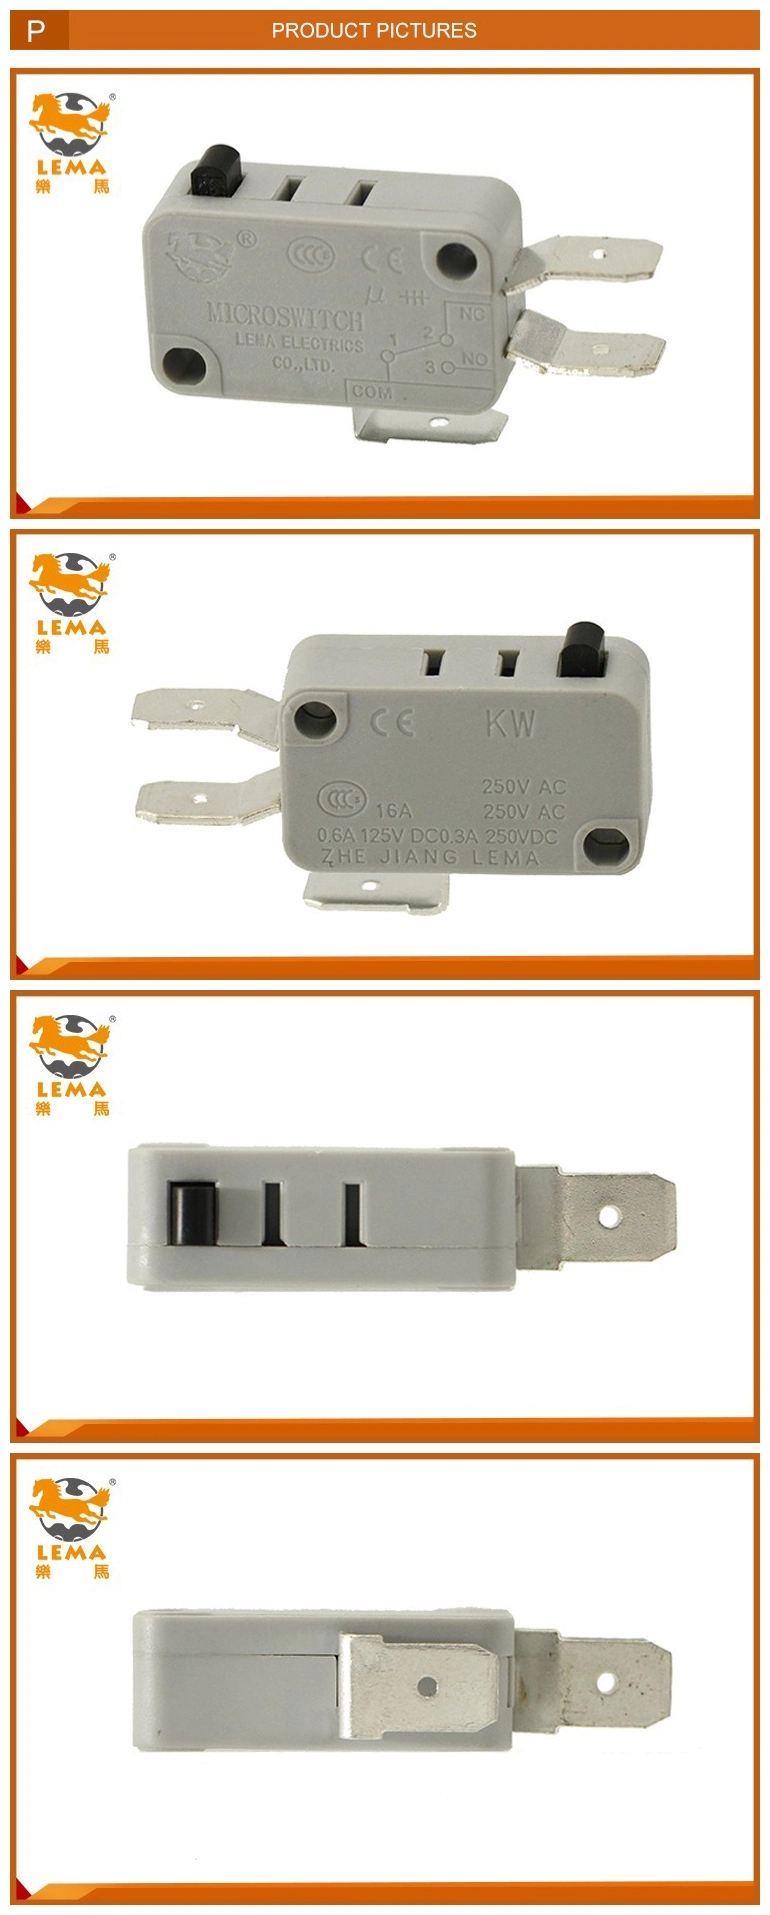 Lema Kw7-0u Grey Actuator Plastic Micro Switch T85 5e5 3 Pins Micro Switch